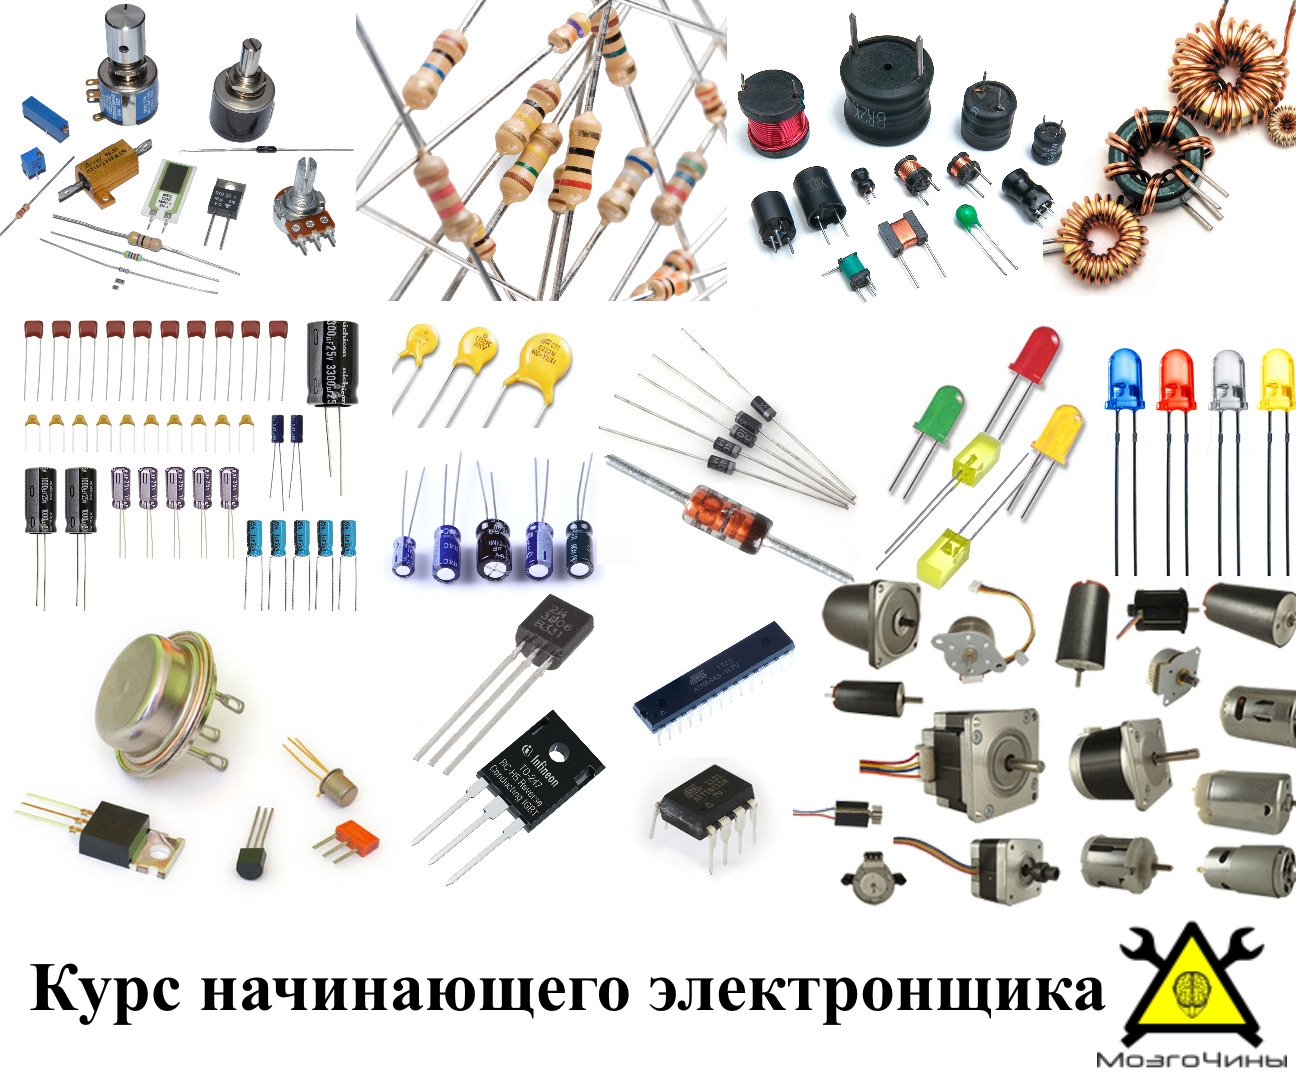 Work components. 302 Радиодеталь. Детали микросхем. Электродетали для микросхем. Радиодетали на плате.